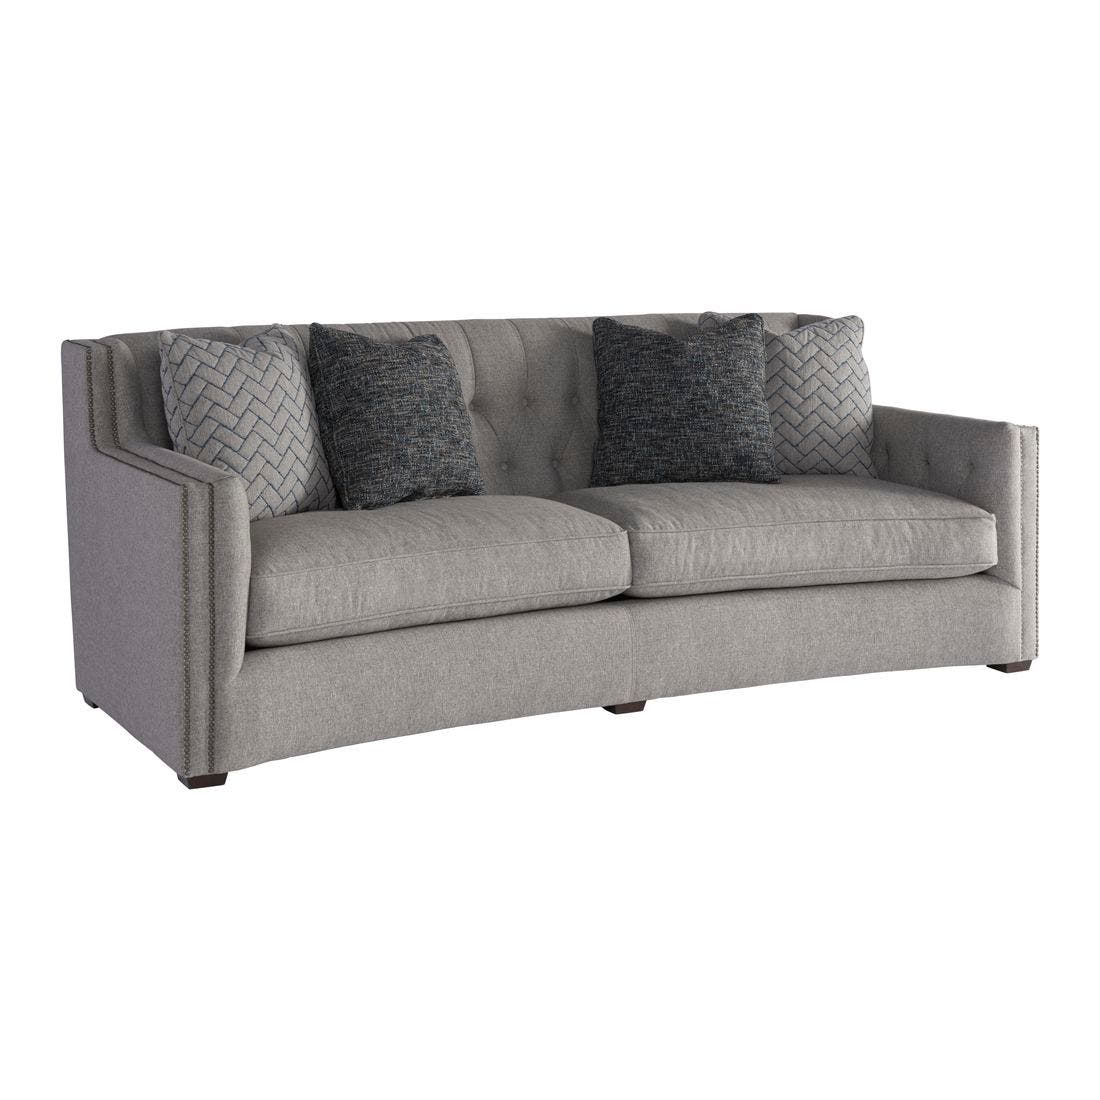 19170527-688501-775-furniture-sofa-recliner-sofas-01